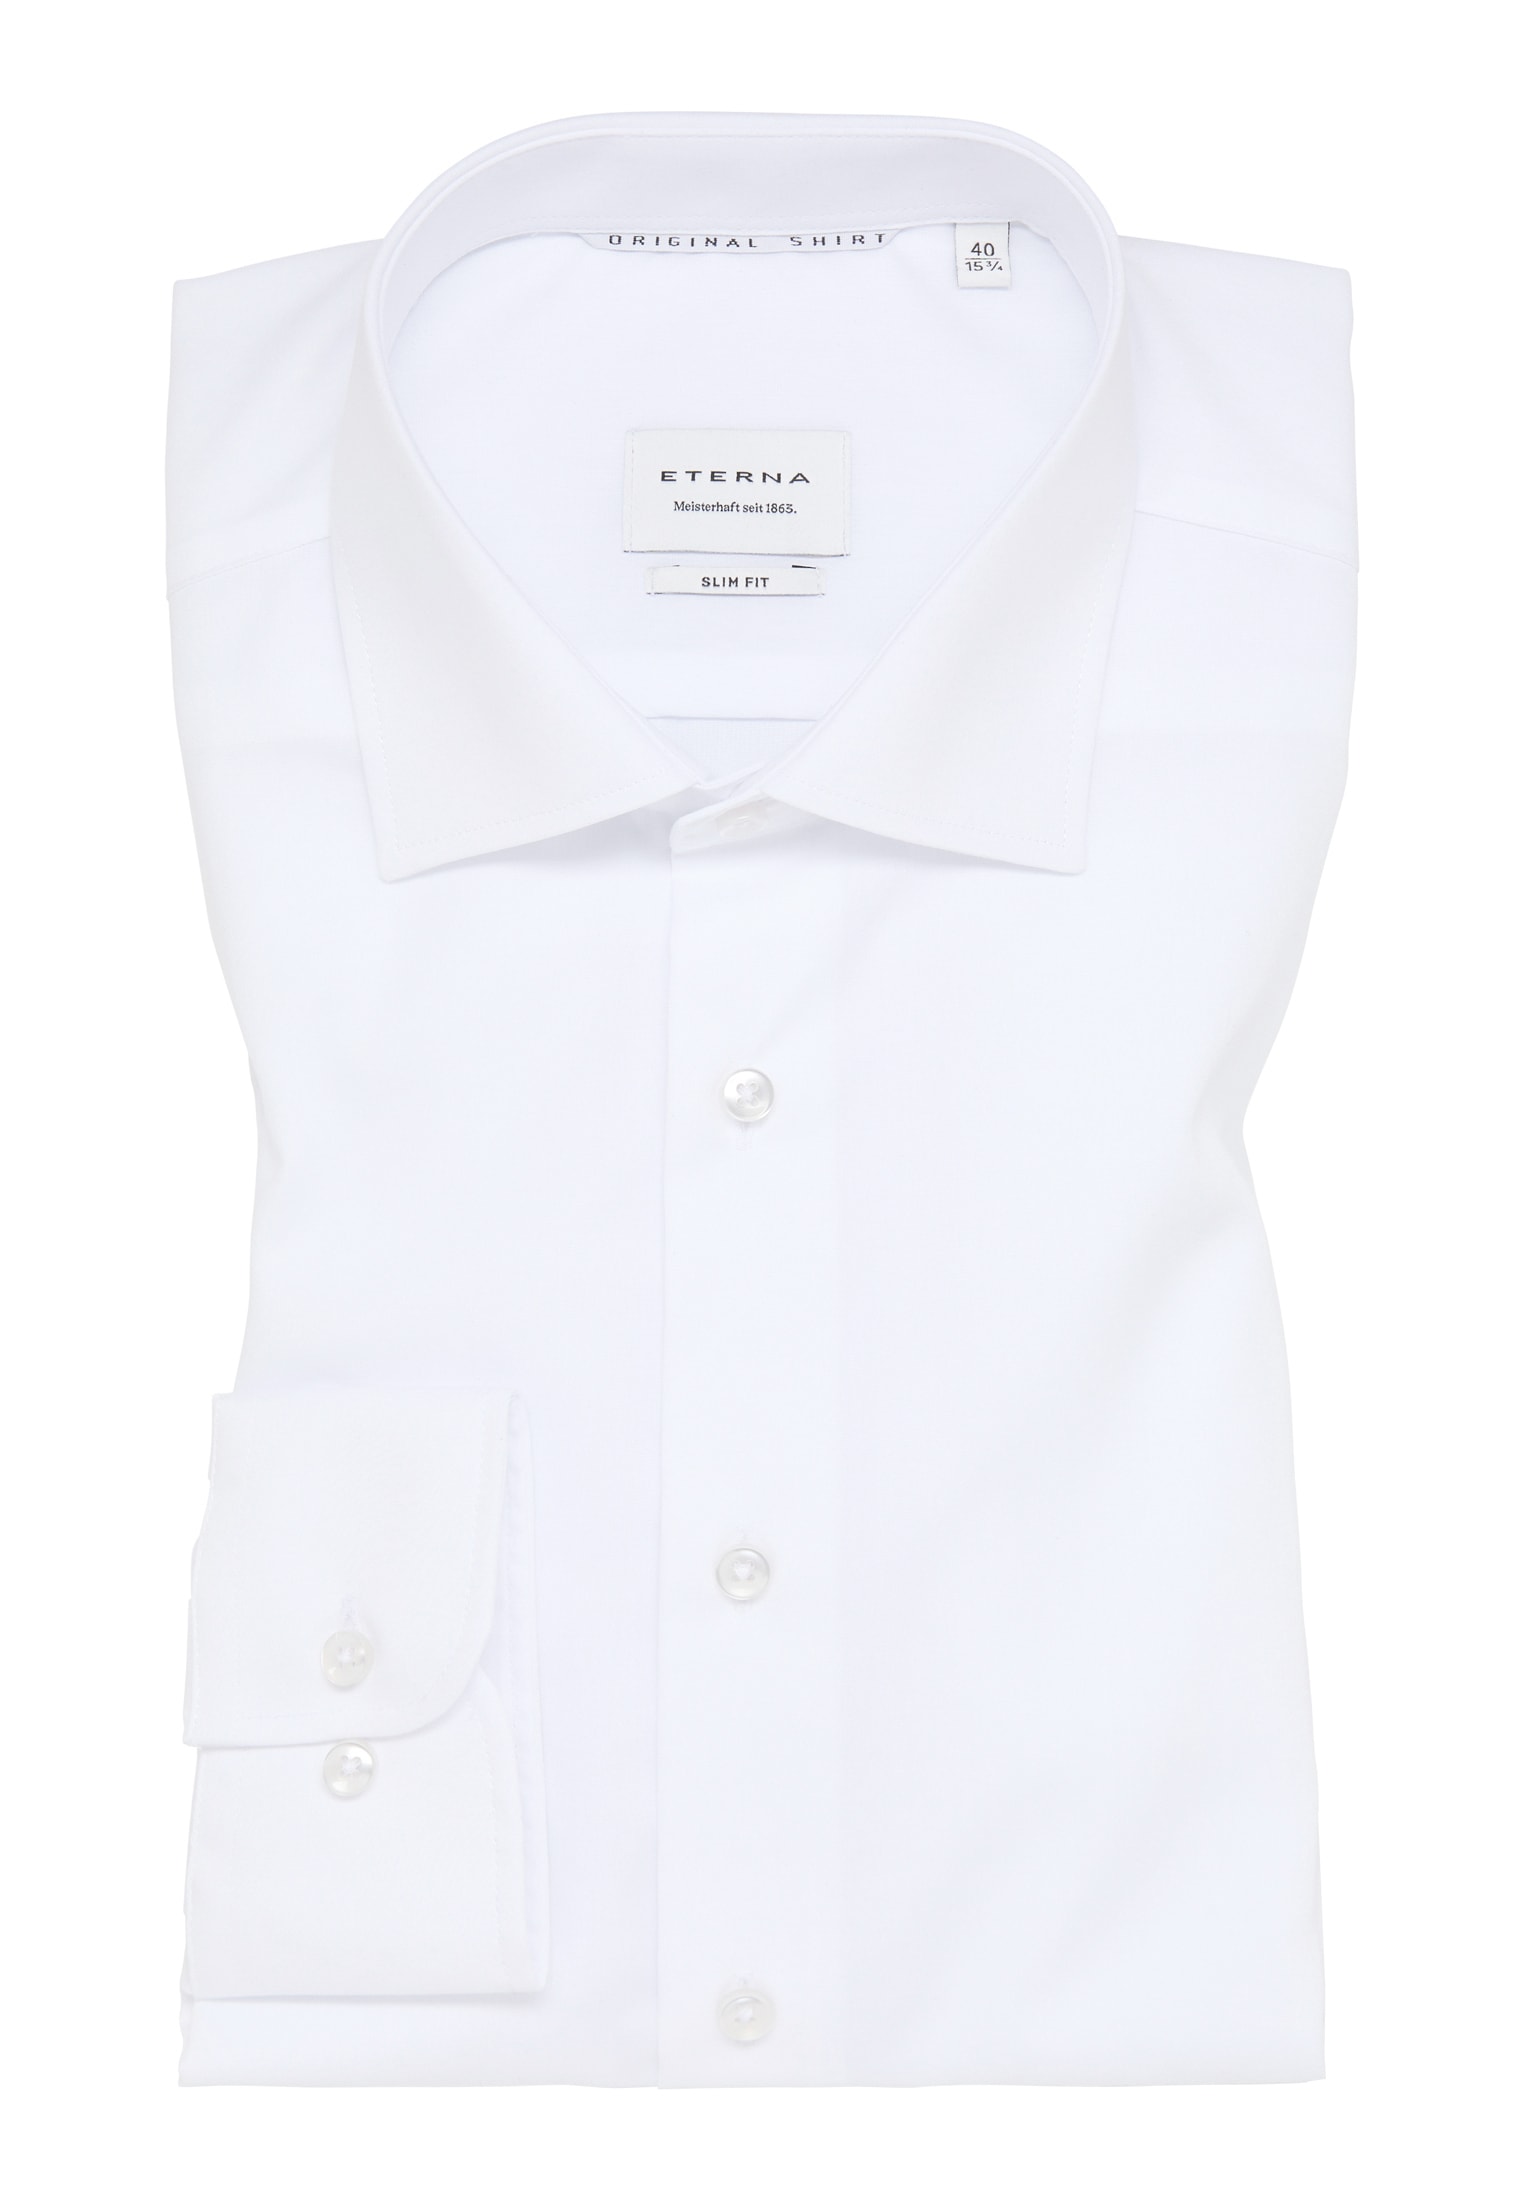 SLIM FIT Original Shirt in weiß unifarben | weiß | 40 | Langarm |  1SH12598-00-01-40-1/1